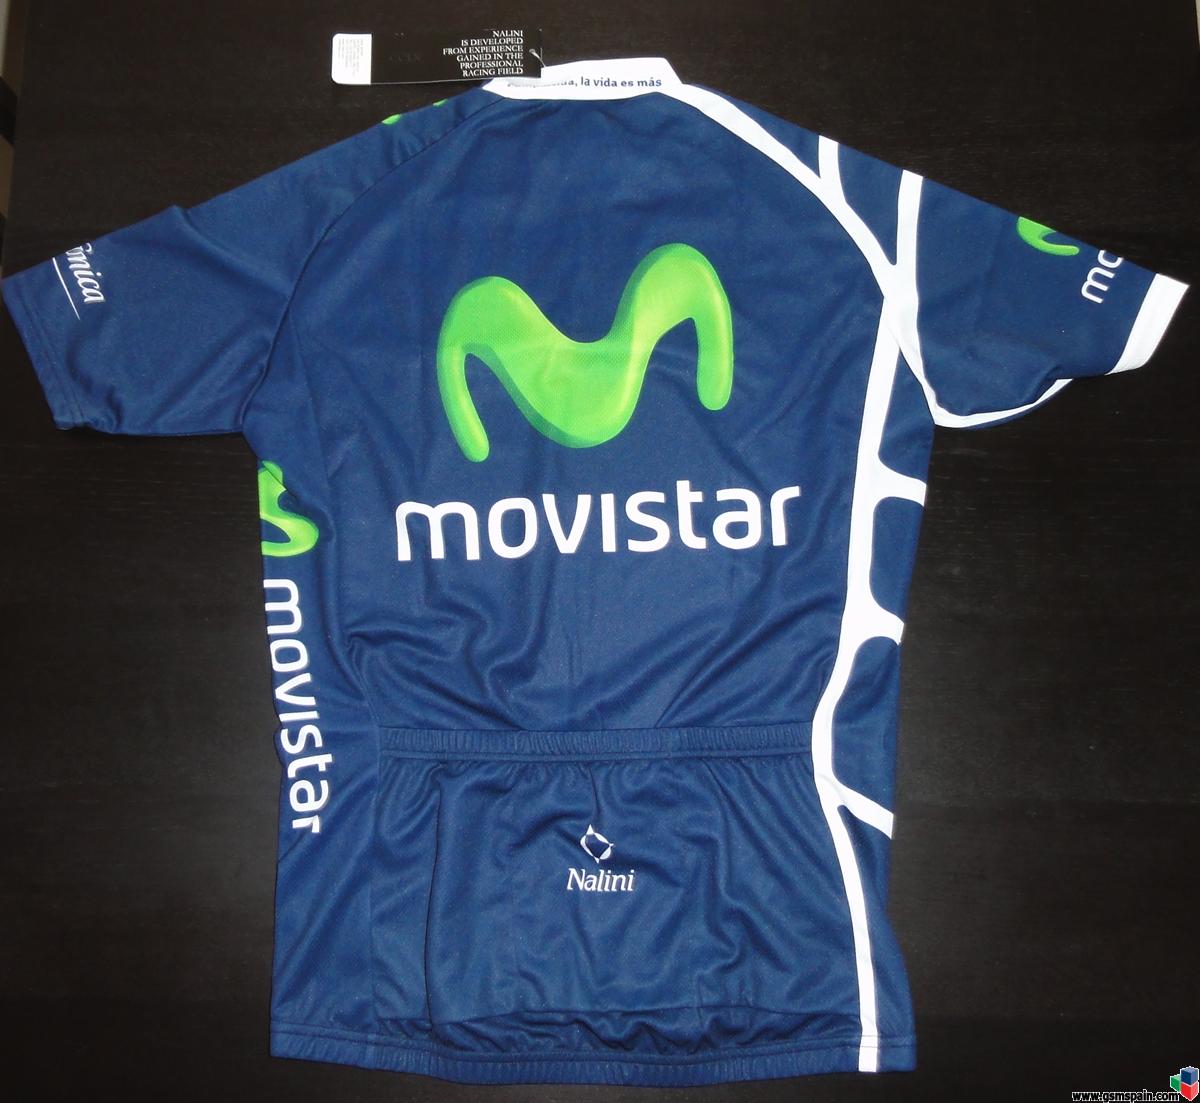 [VENDO] Maillot oficial equipo ciclista Movistar, nuevo, ORIGINAL